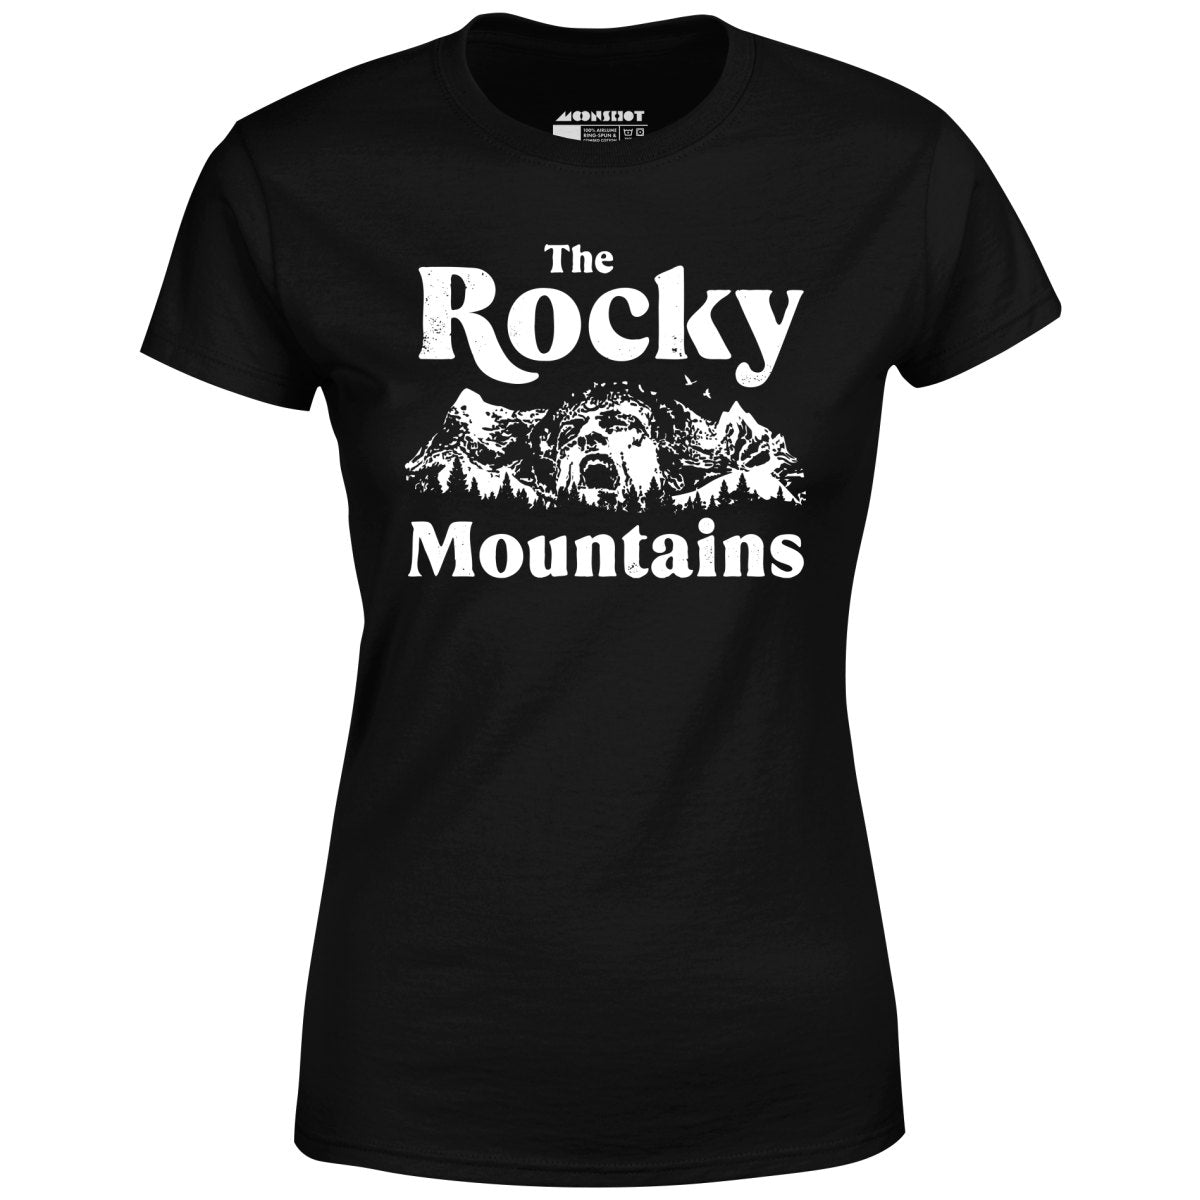 The Rocky Mountains - Women's T-Shirt